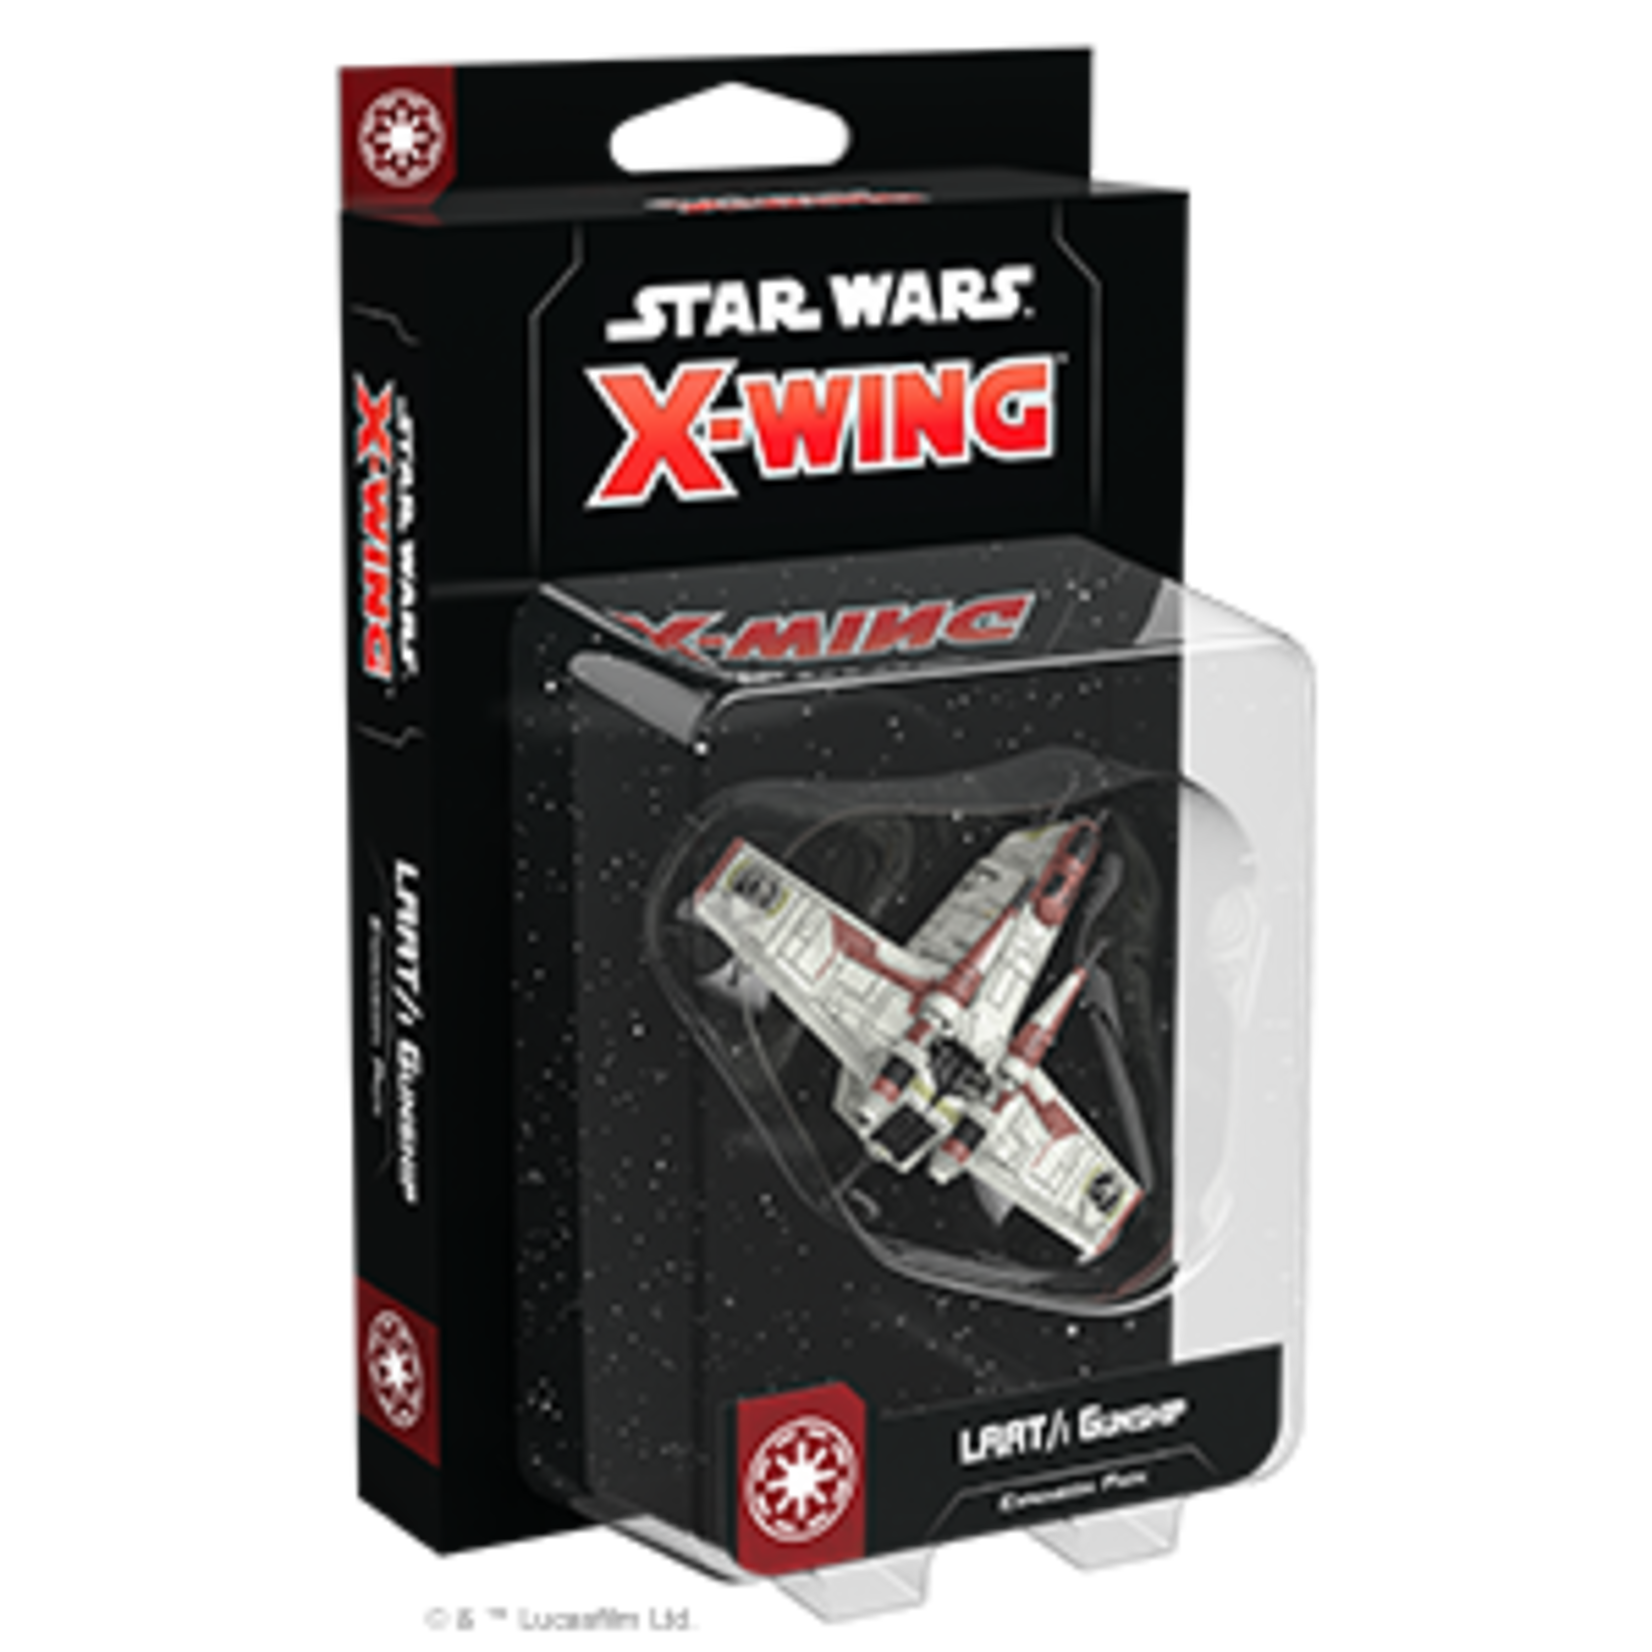 Fantasy Flight Games Star Wars: X-Wing 2nd Edition - LAAT/I Gunship Expansion Pack